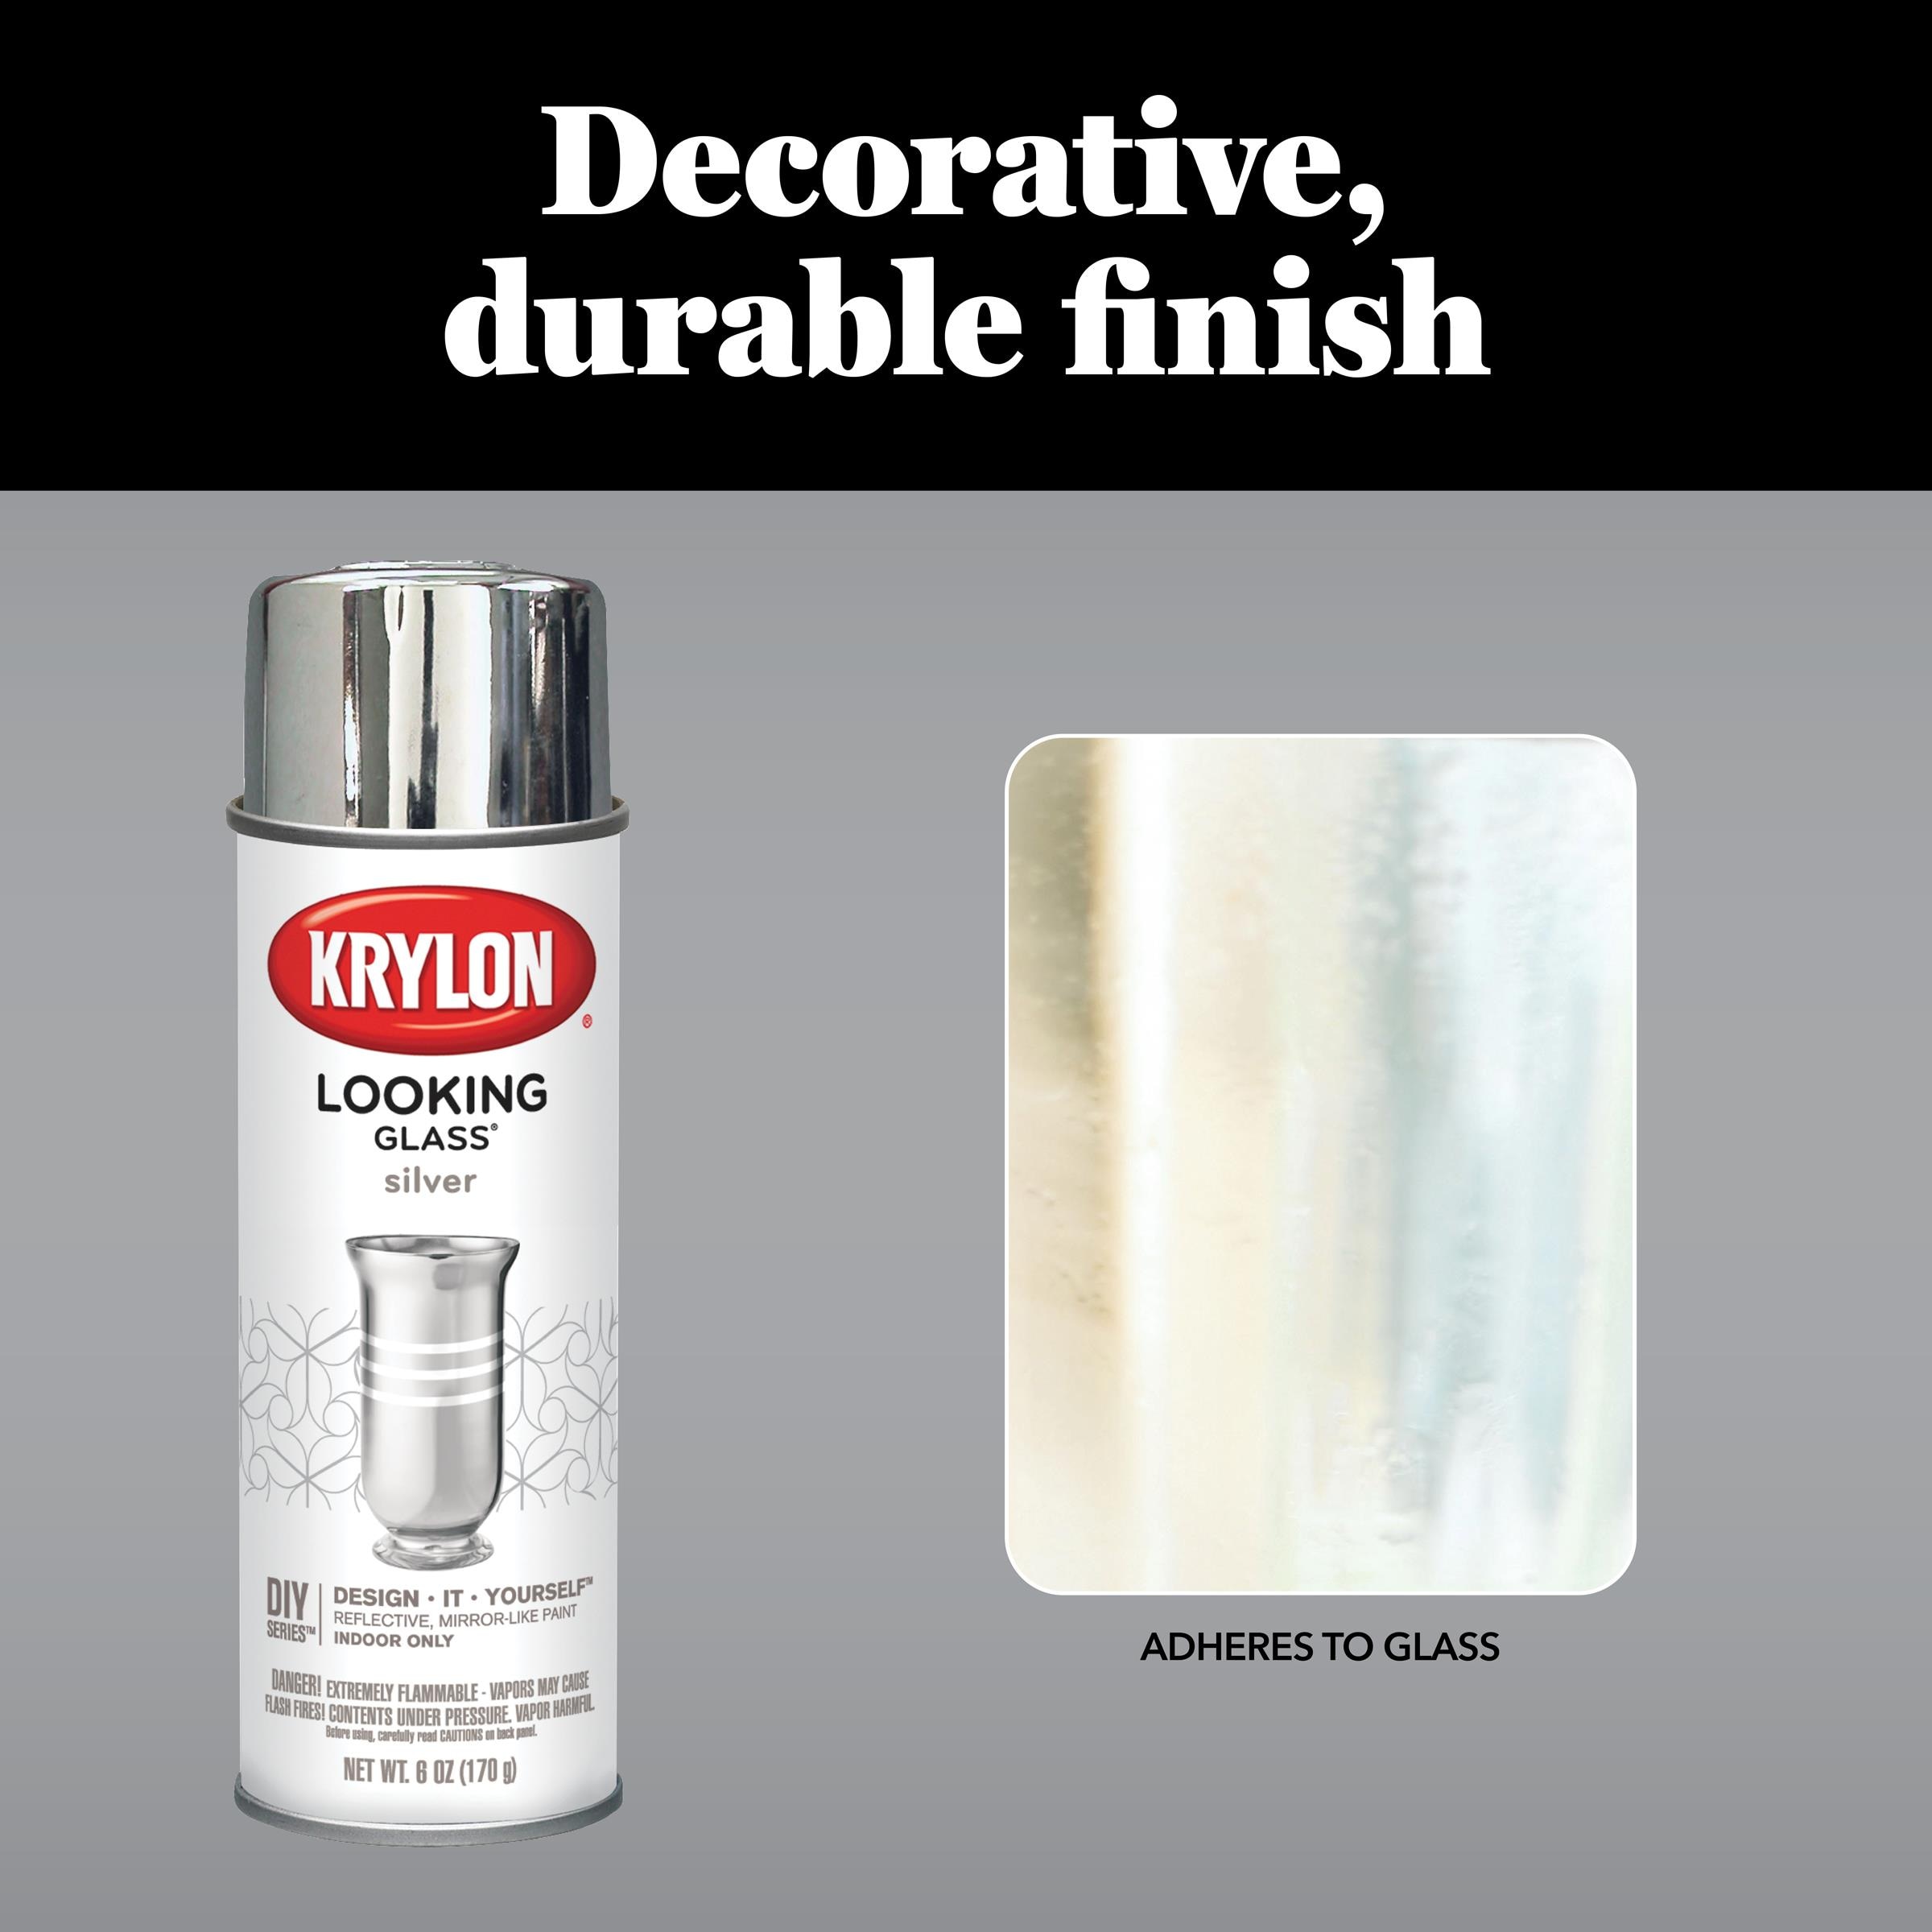 Krylon High-gloss Silver Metallic Spray Paint (NET WT. 12-oz) at